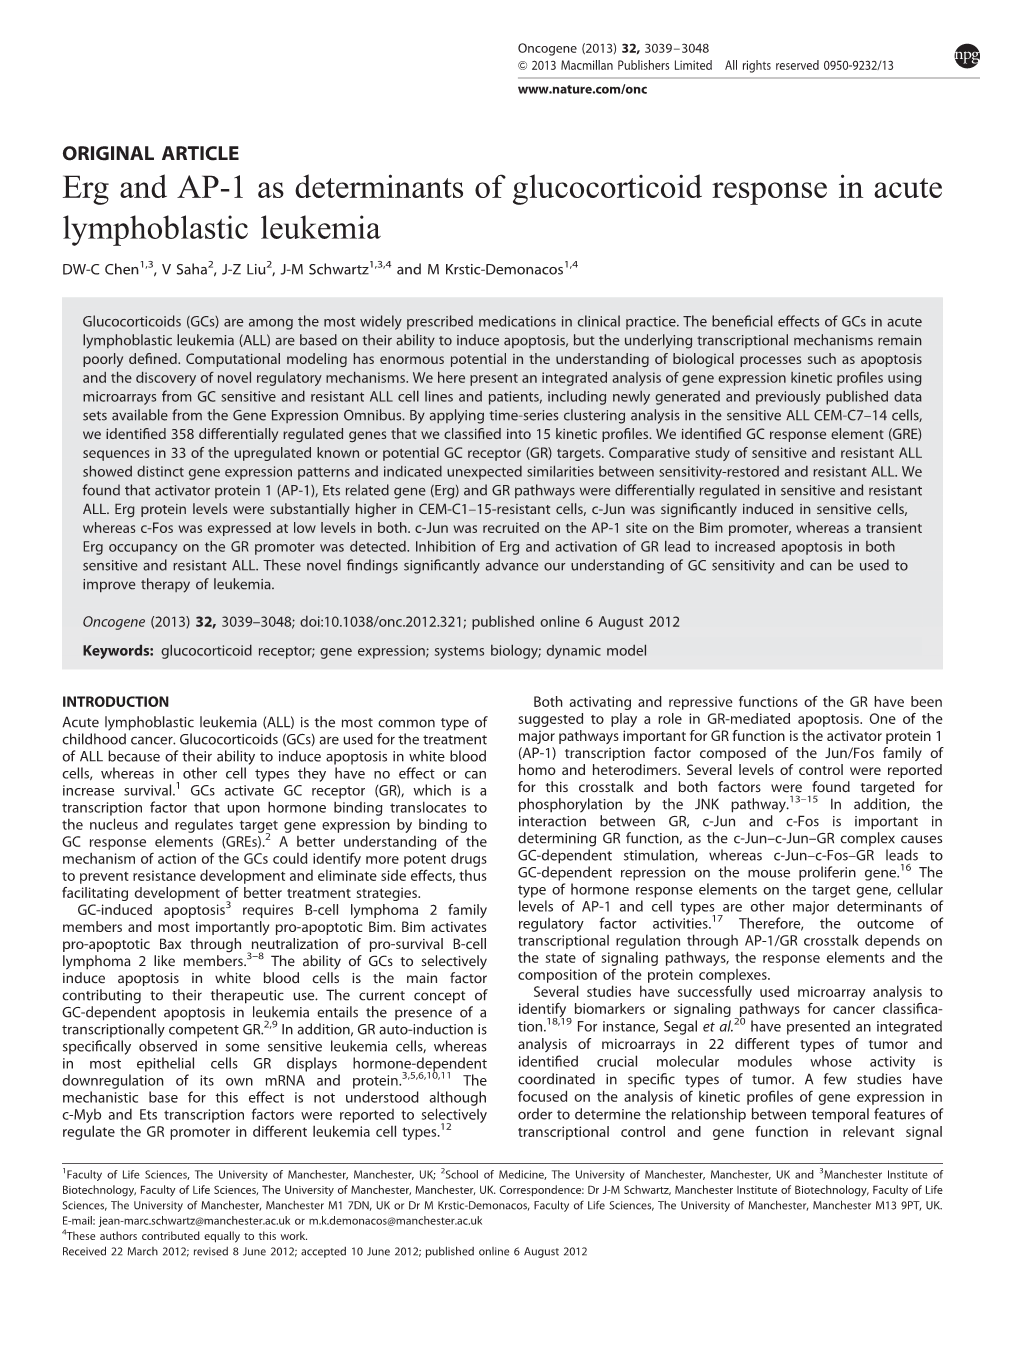 Erg and AP-1 As Determinants of Glucocorticoid Response in Acute Lymphoblastic Leukemia